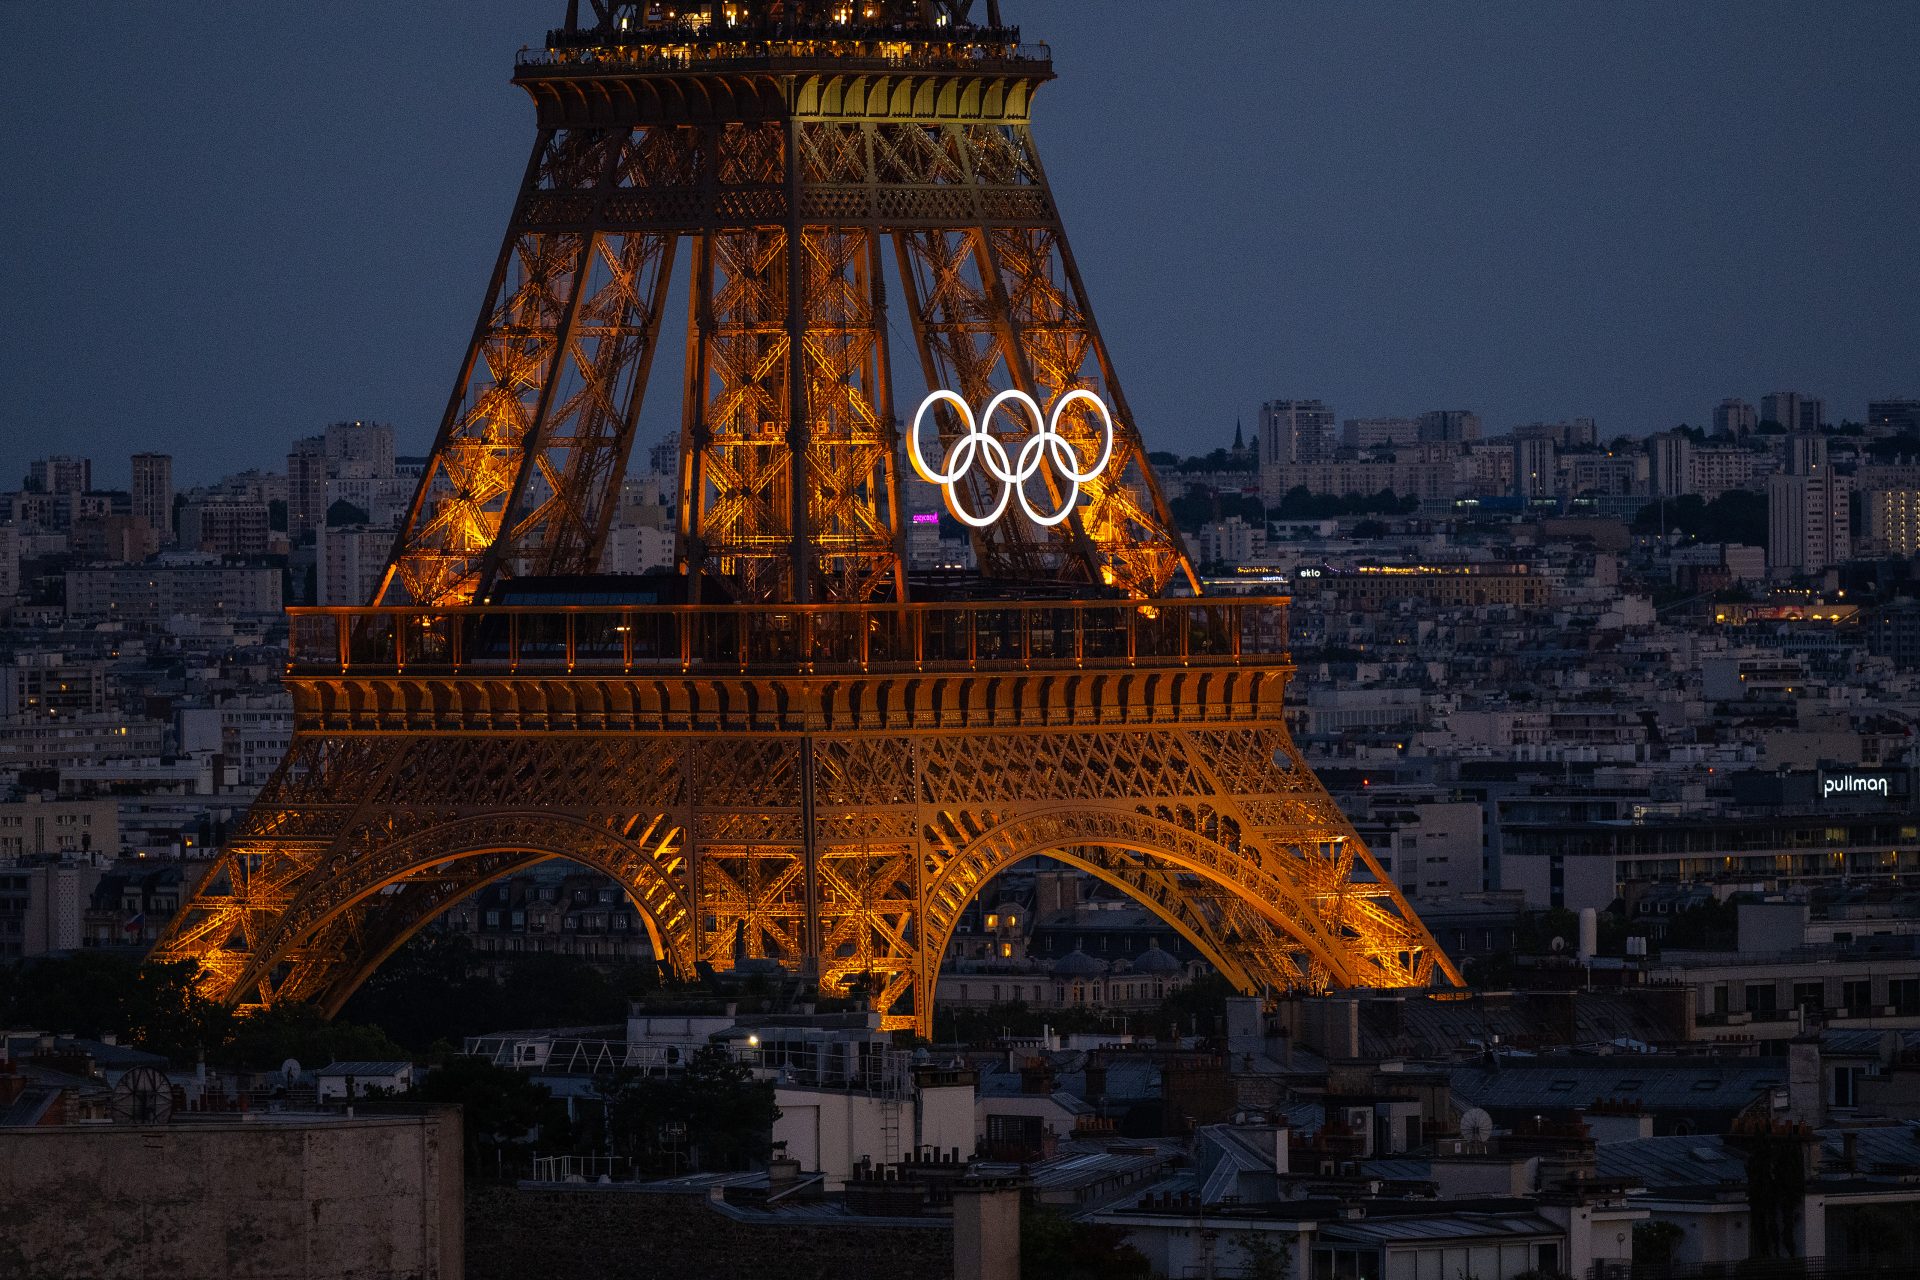 Paris 2024: The dark side to the Olympics